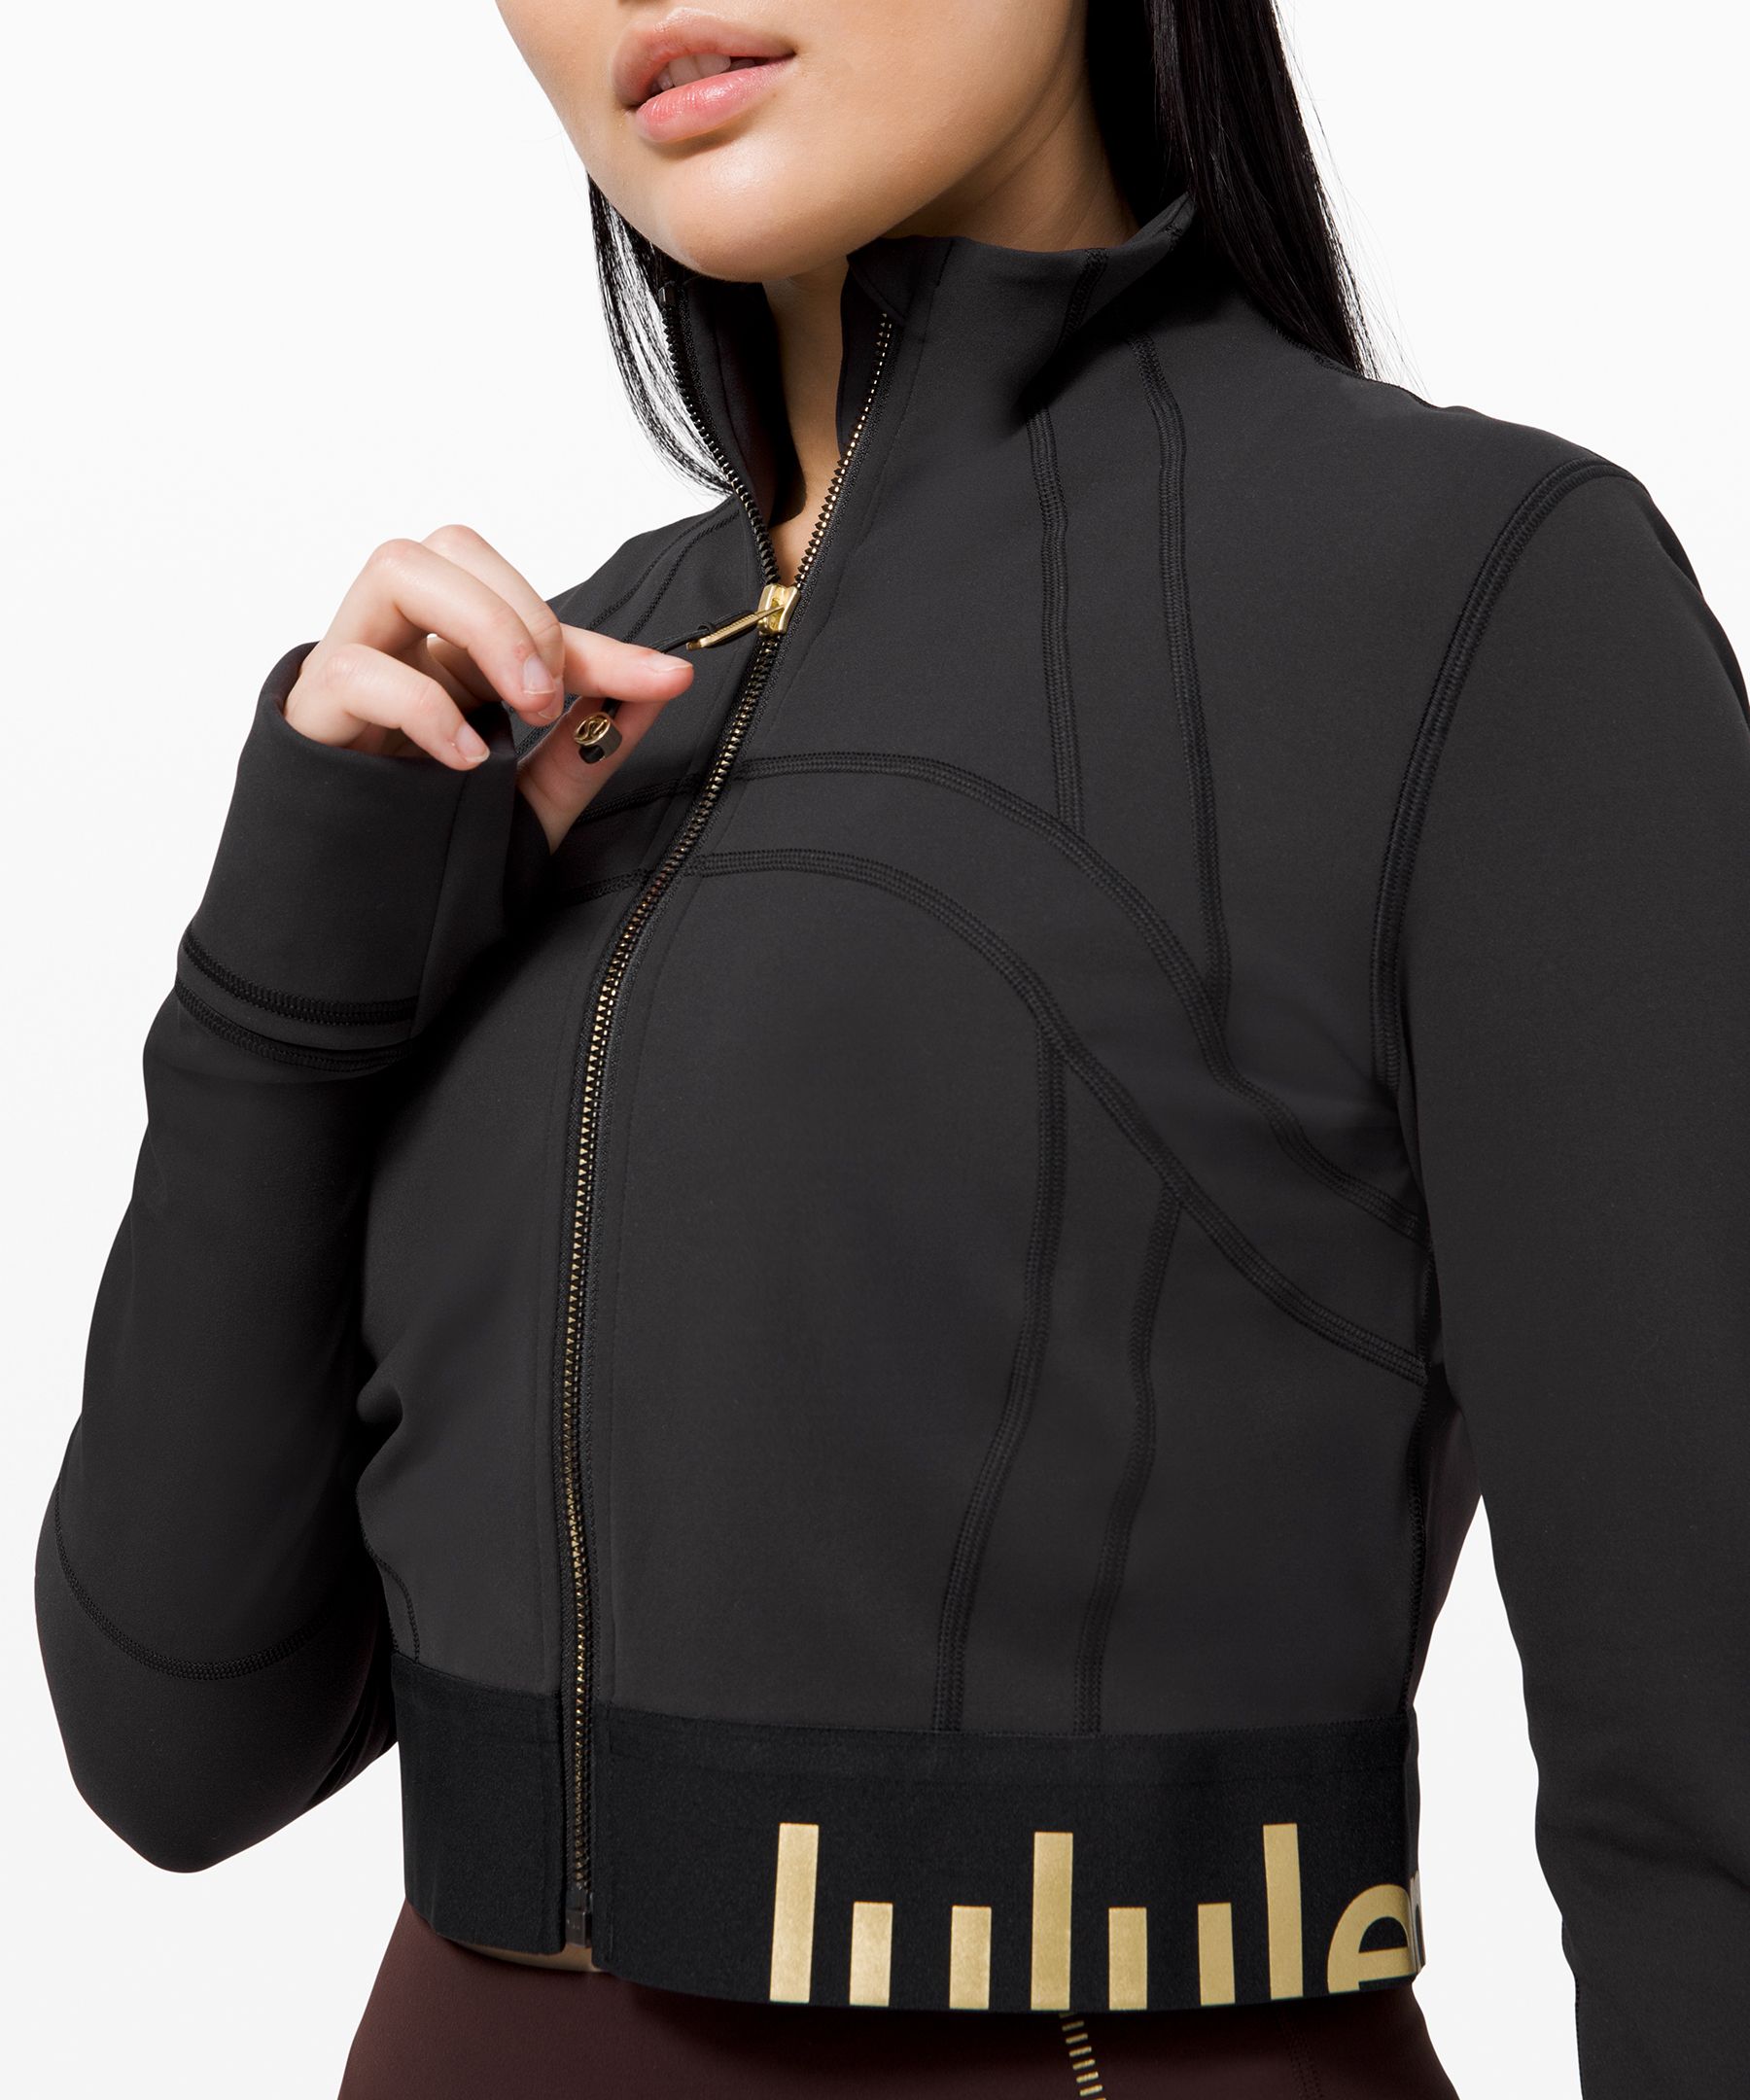 Lululemon Define Cropped Jacket - Best Price in Singapore - Mar